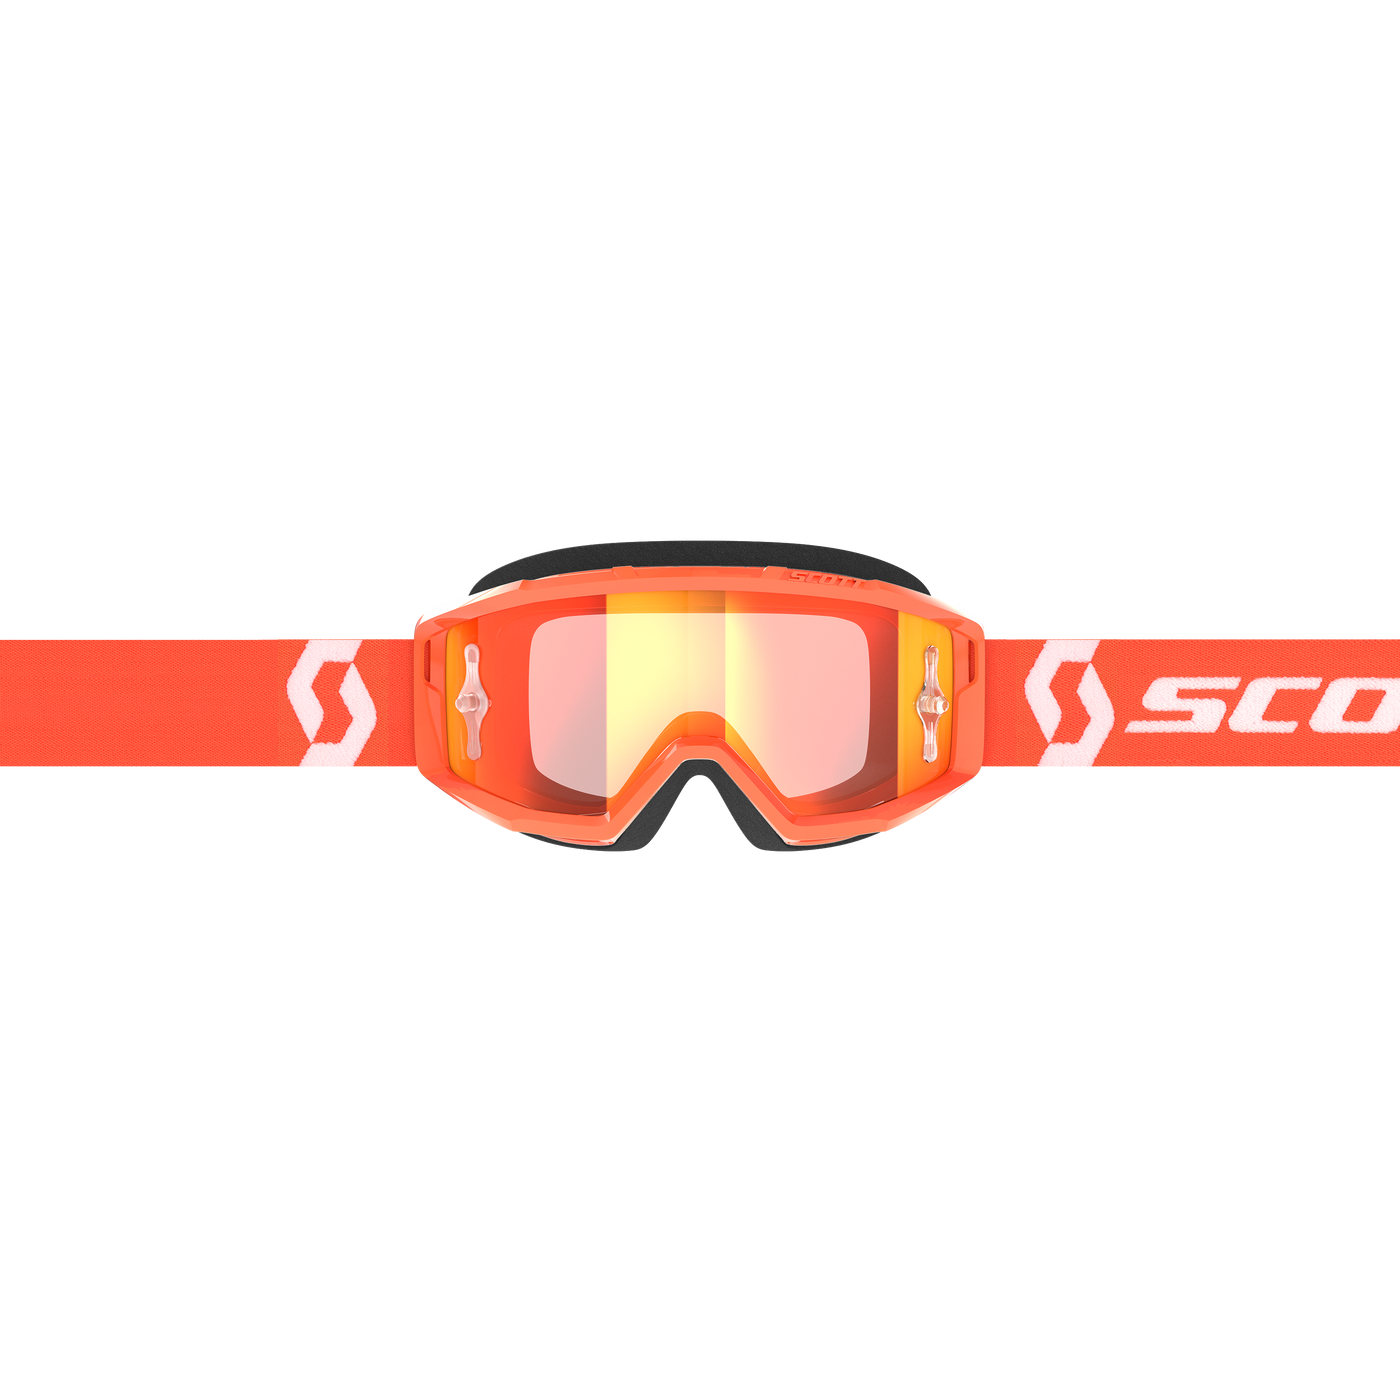 Scott Primal Goggle, Orange / White - Orange Chrome Works Lens